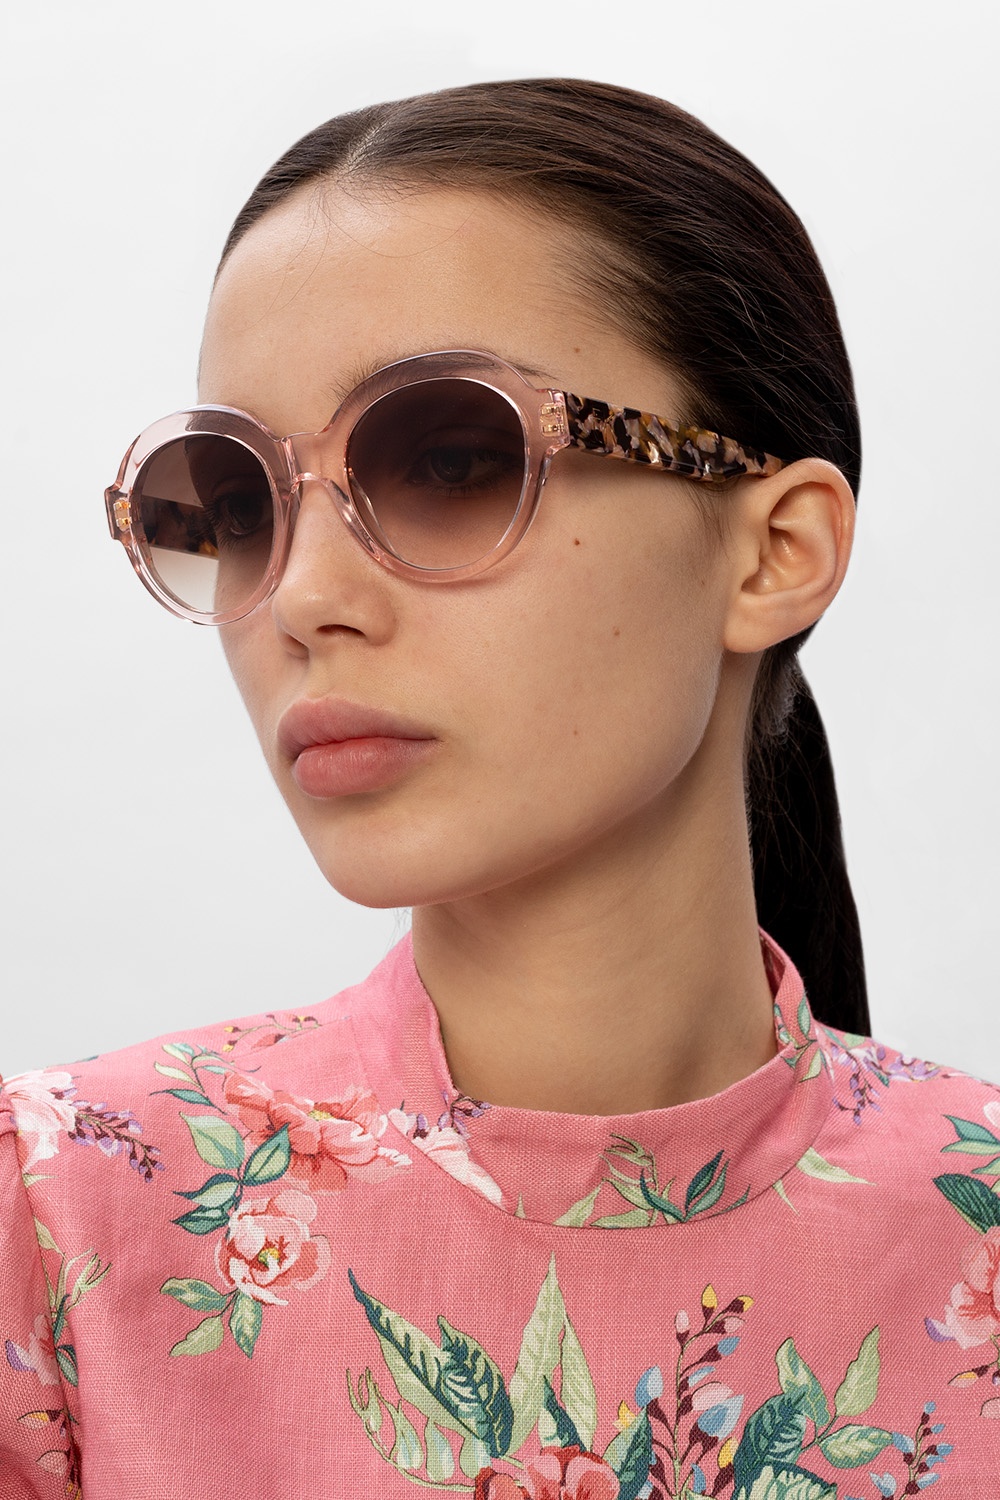 Emmanuelle Khanh sunglasses meet with logo